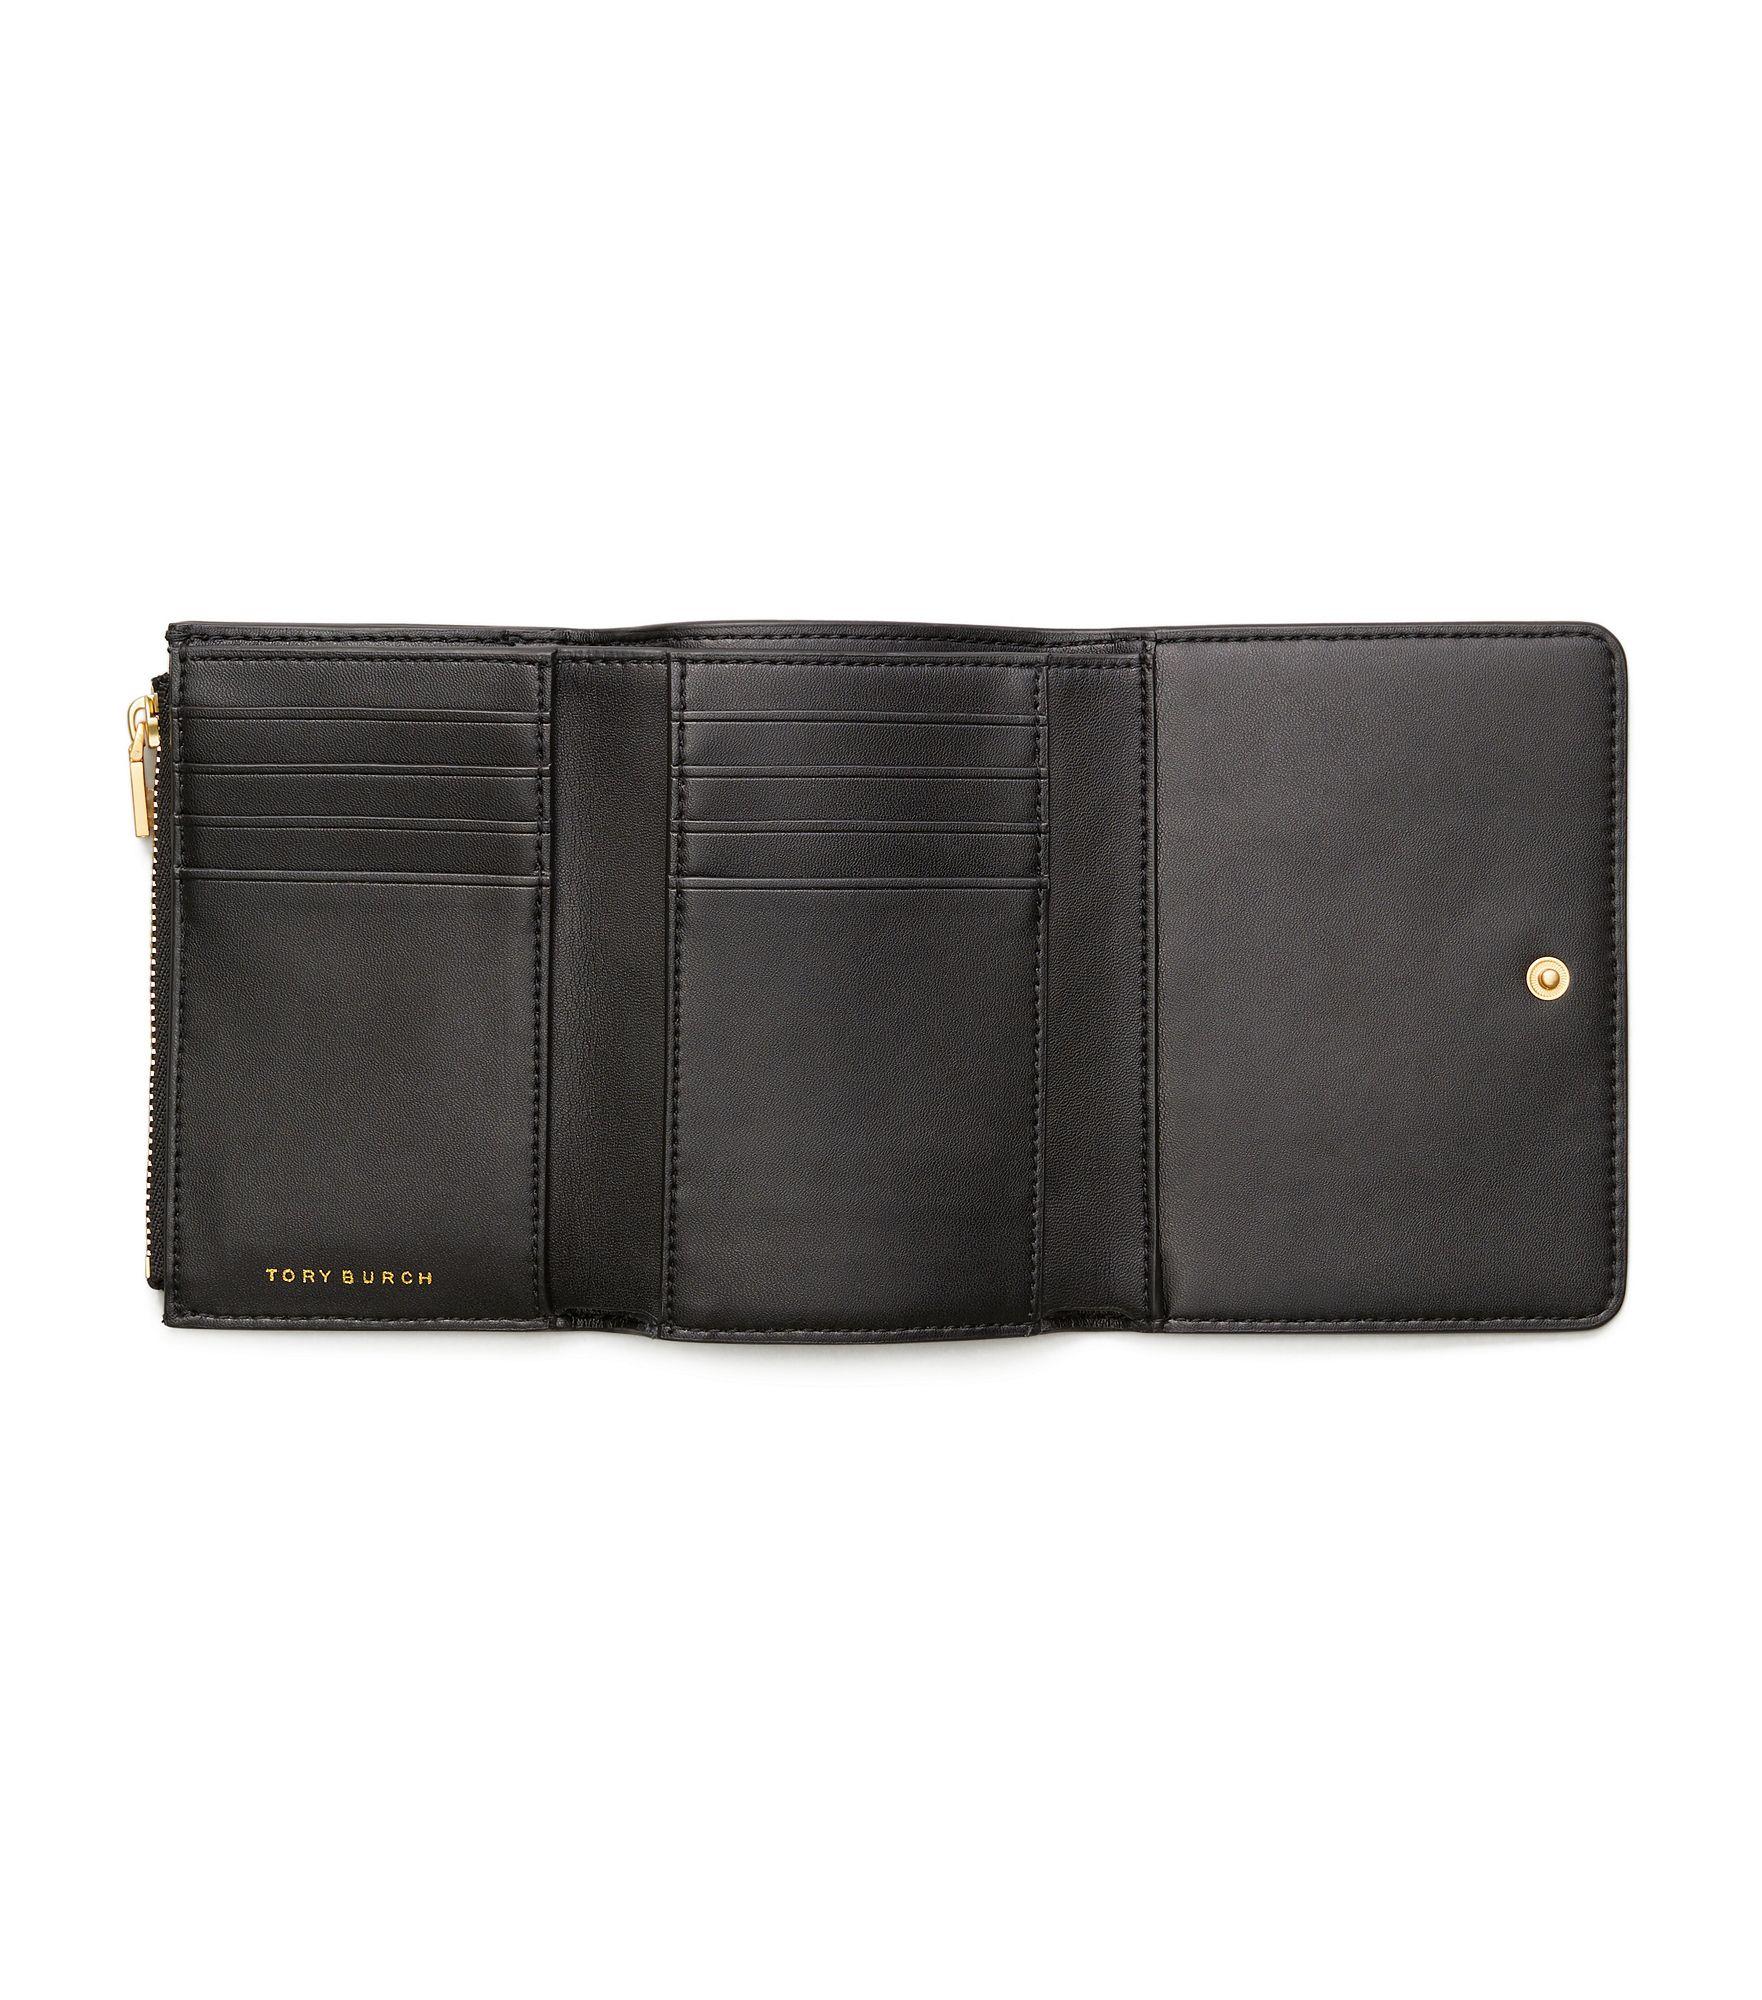 Tory Burch Leather Miller Medium Flap Wallet in Black/Gold (Black 